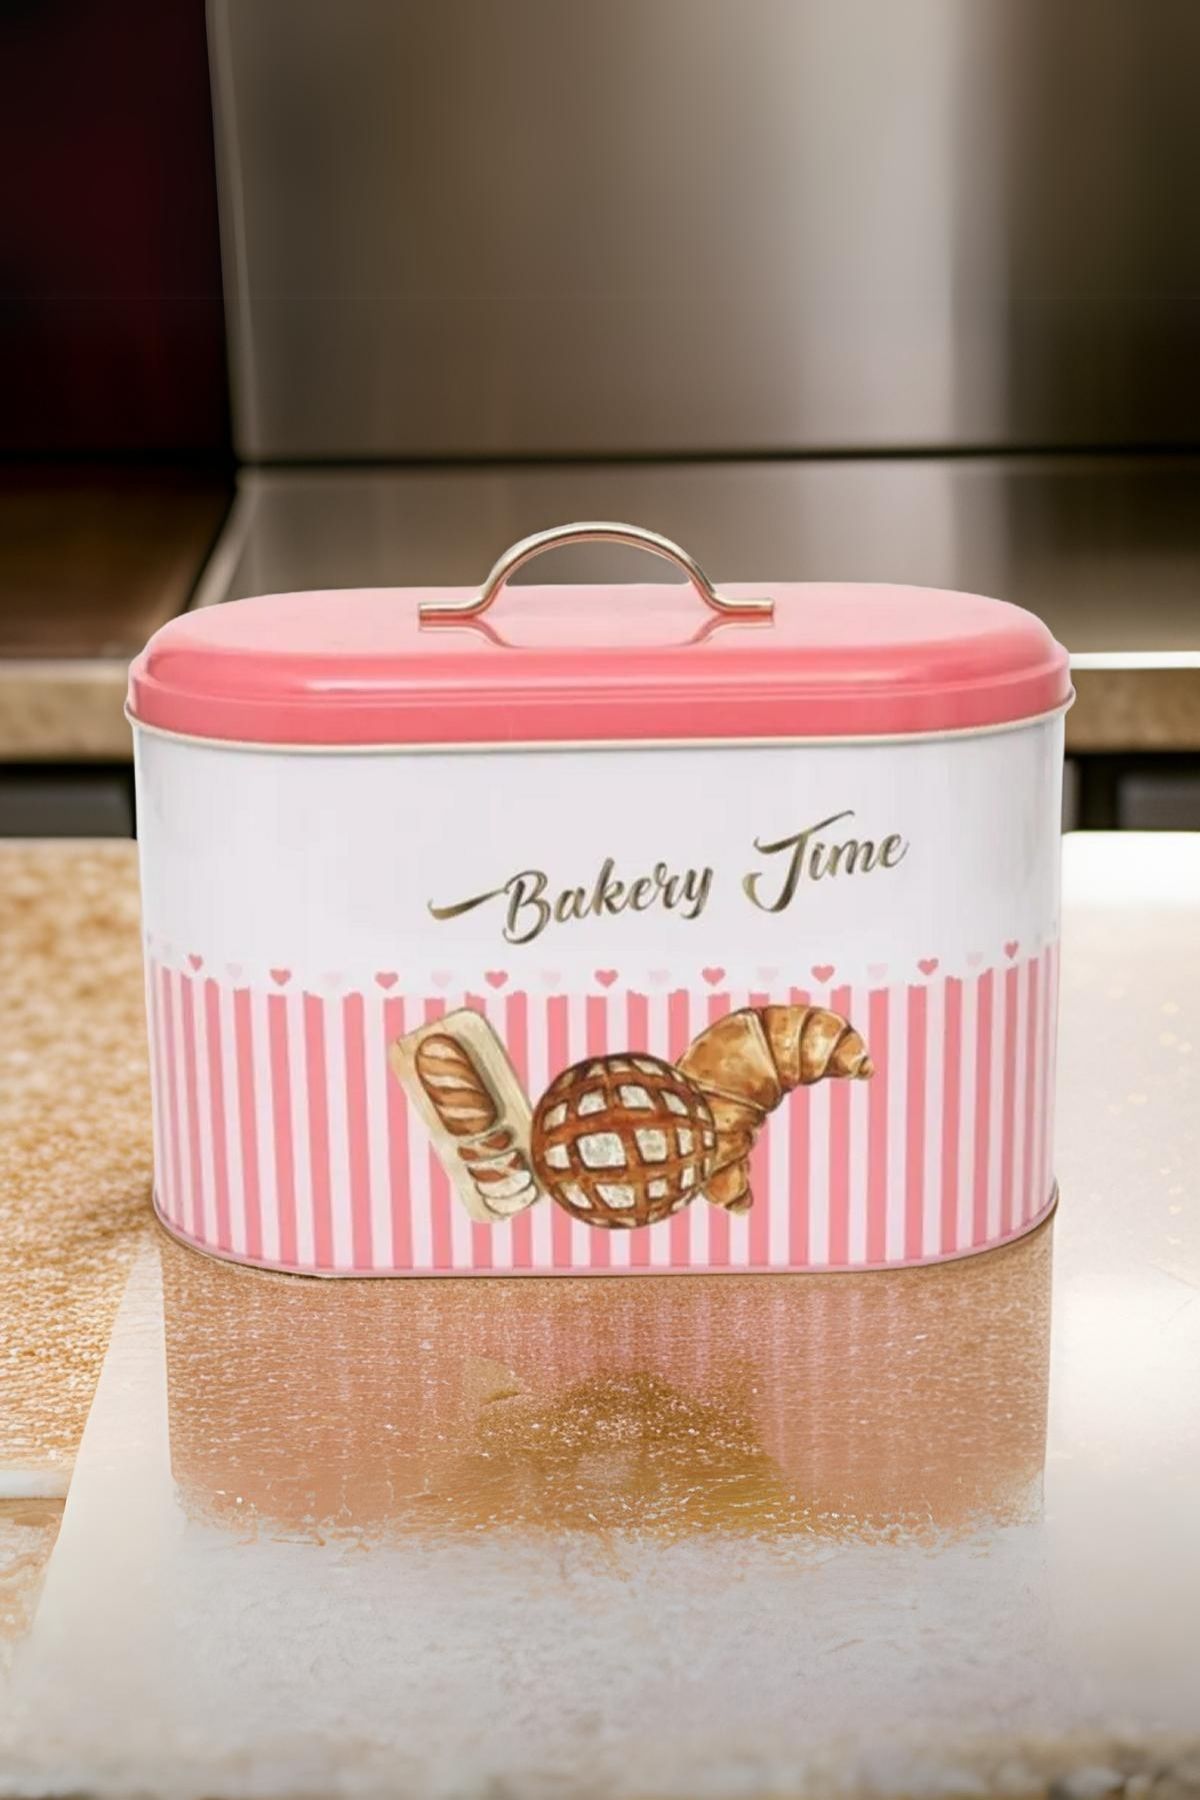 Evle Ef002-e5 Sprinkles Bakery Time Desenli Ekmeklik 10,4 Lt